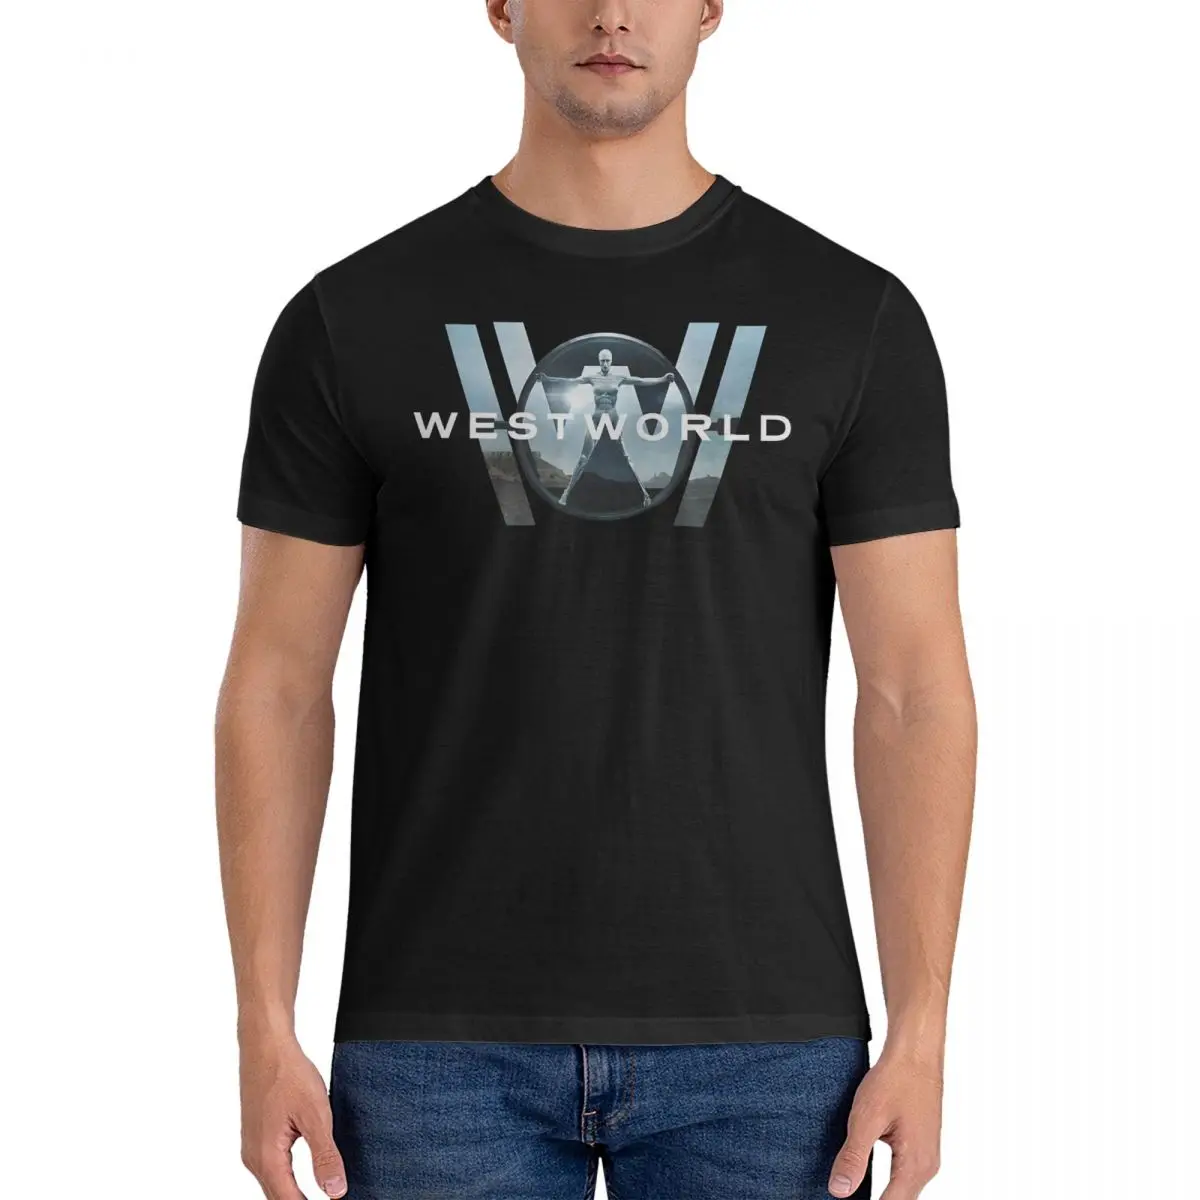 

Men's T-Shirt LOGO Leisure Pure Cotton Tees Short Sleeve Westworld T Shirt Crew Neck Clothes Party